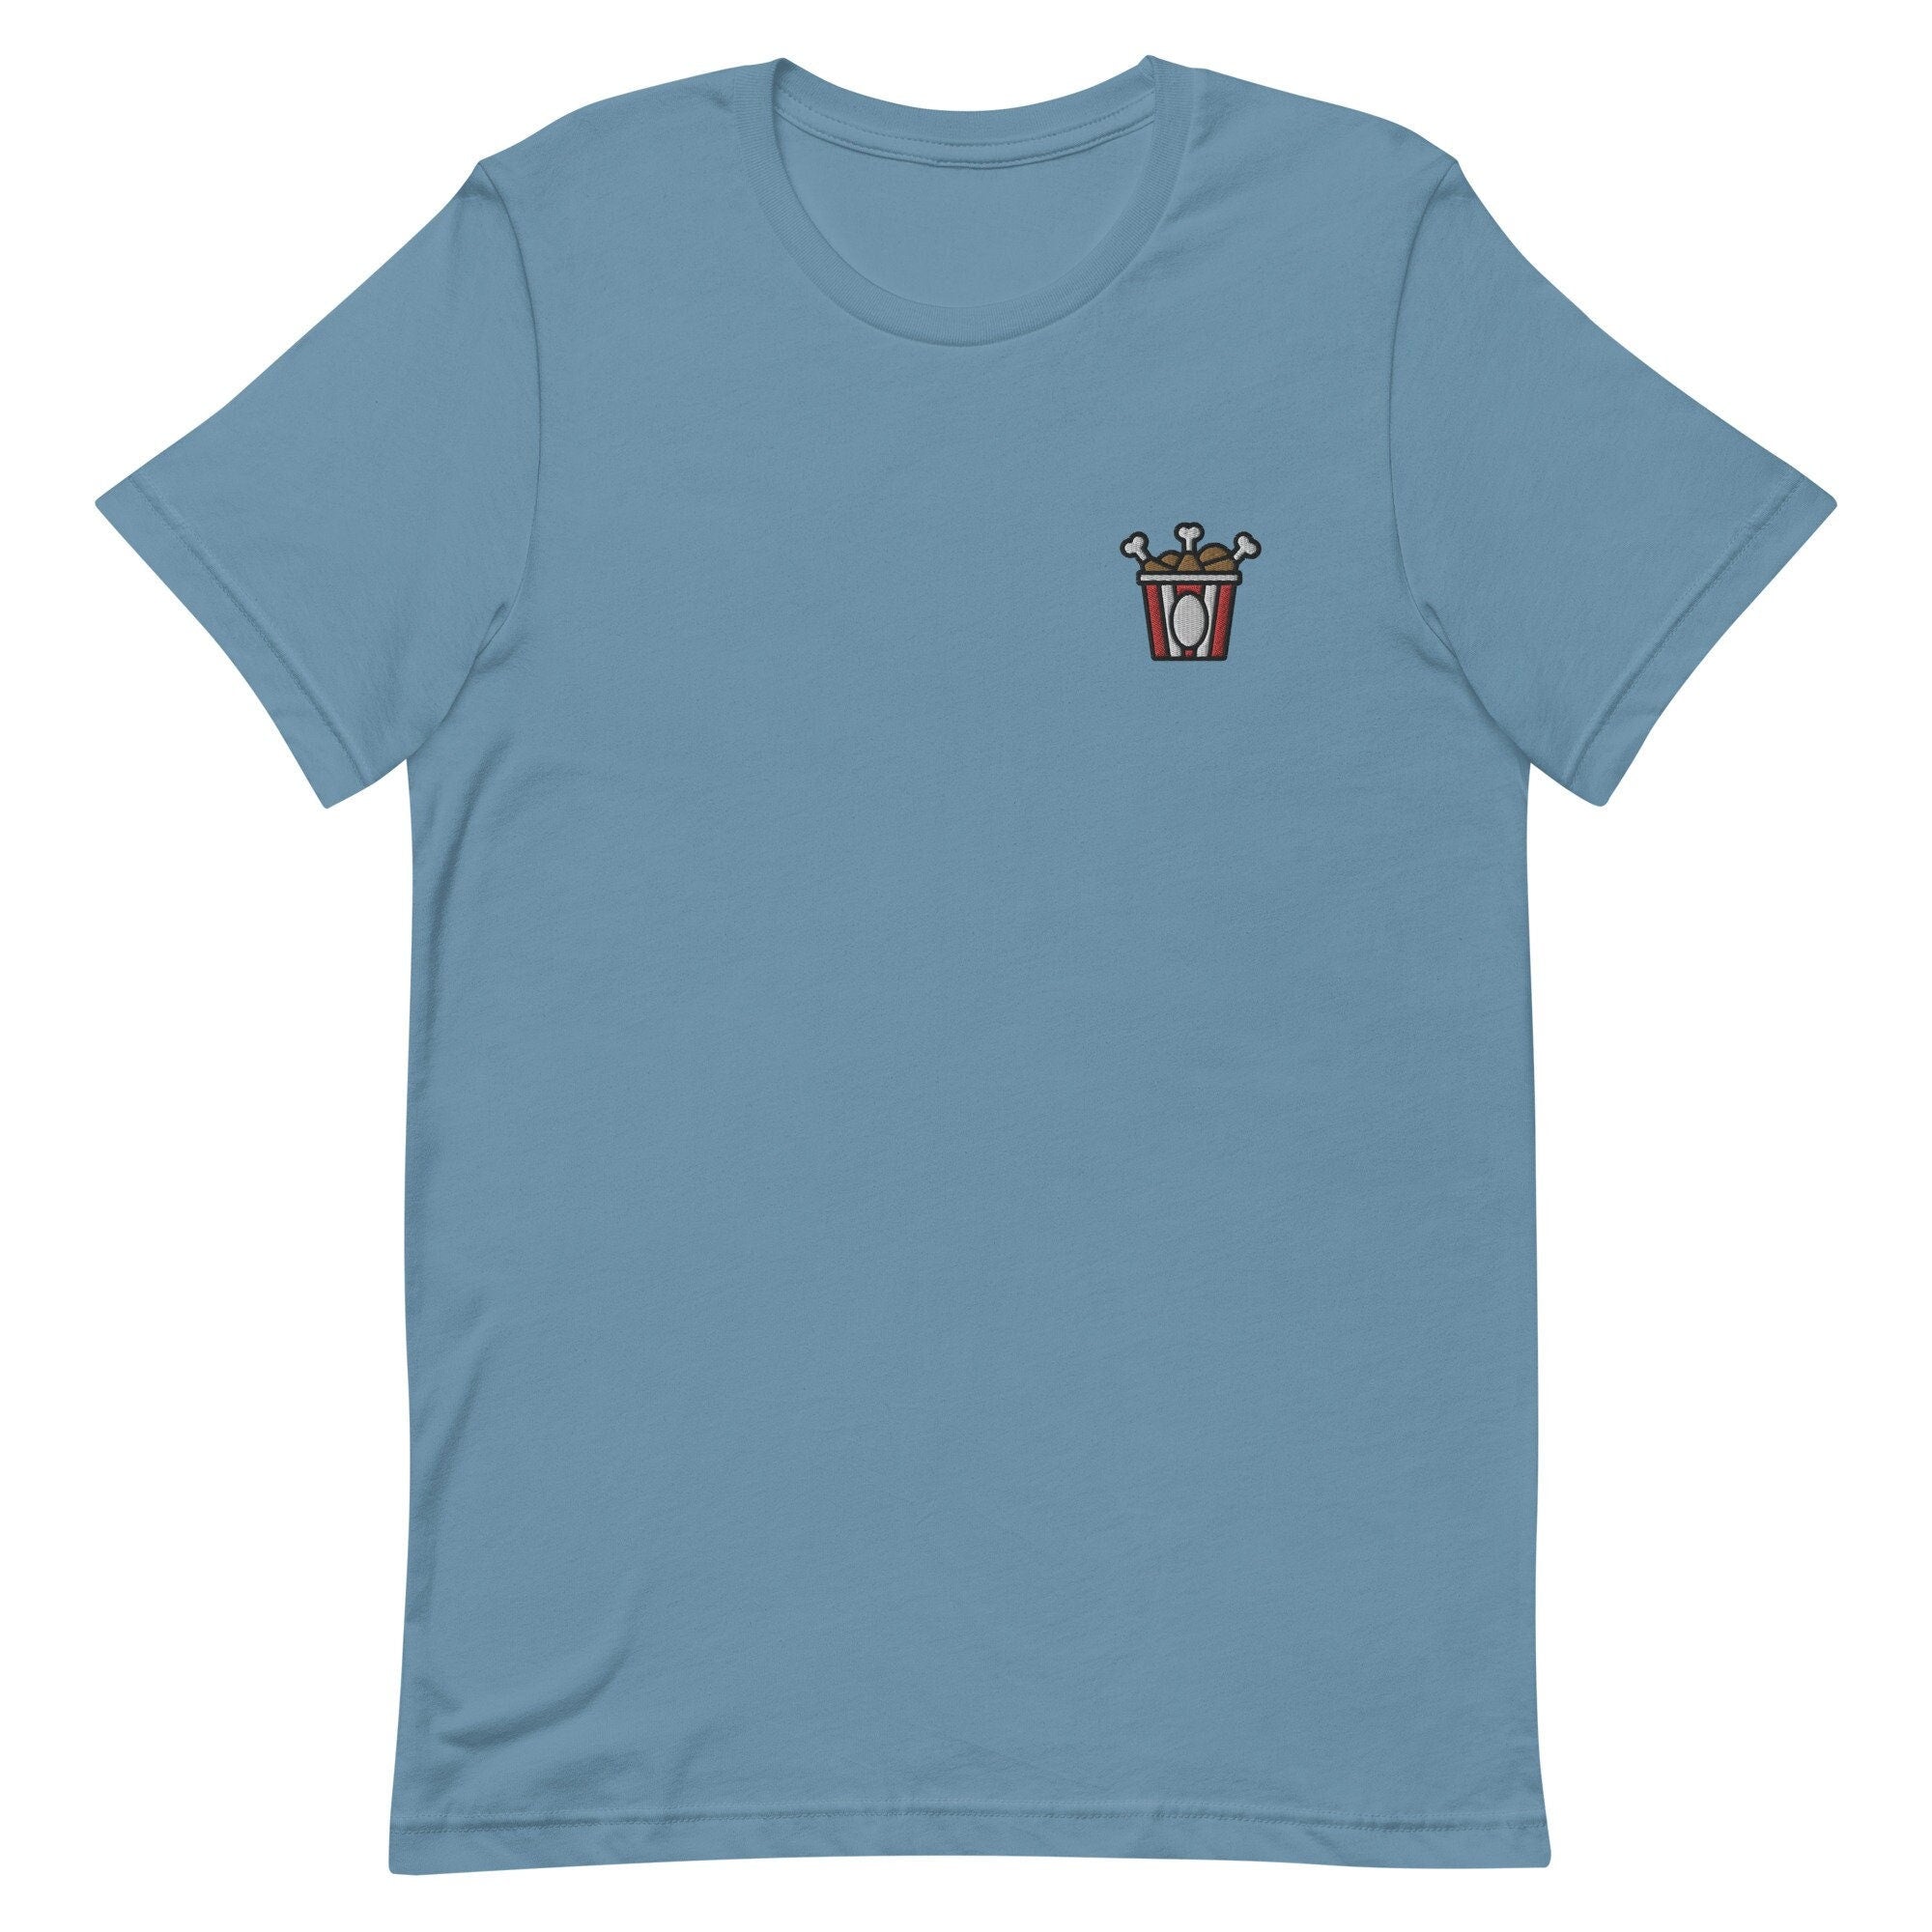 Bucket of Chicken Premium Men's T-Shirt, Embroidered Men's T-Shirt Gift for Boyfriend, Men's Short Sleeve Shirt - Multiple Colors